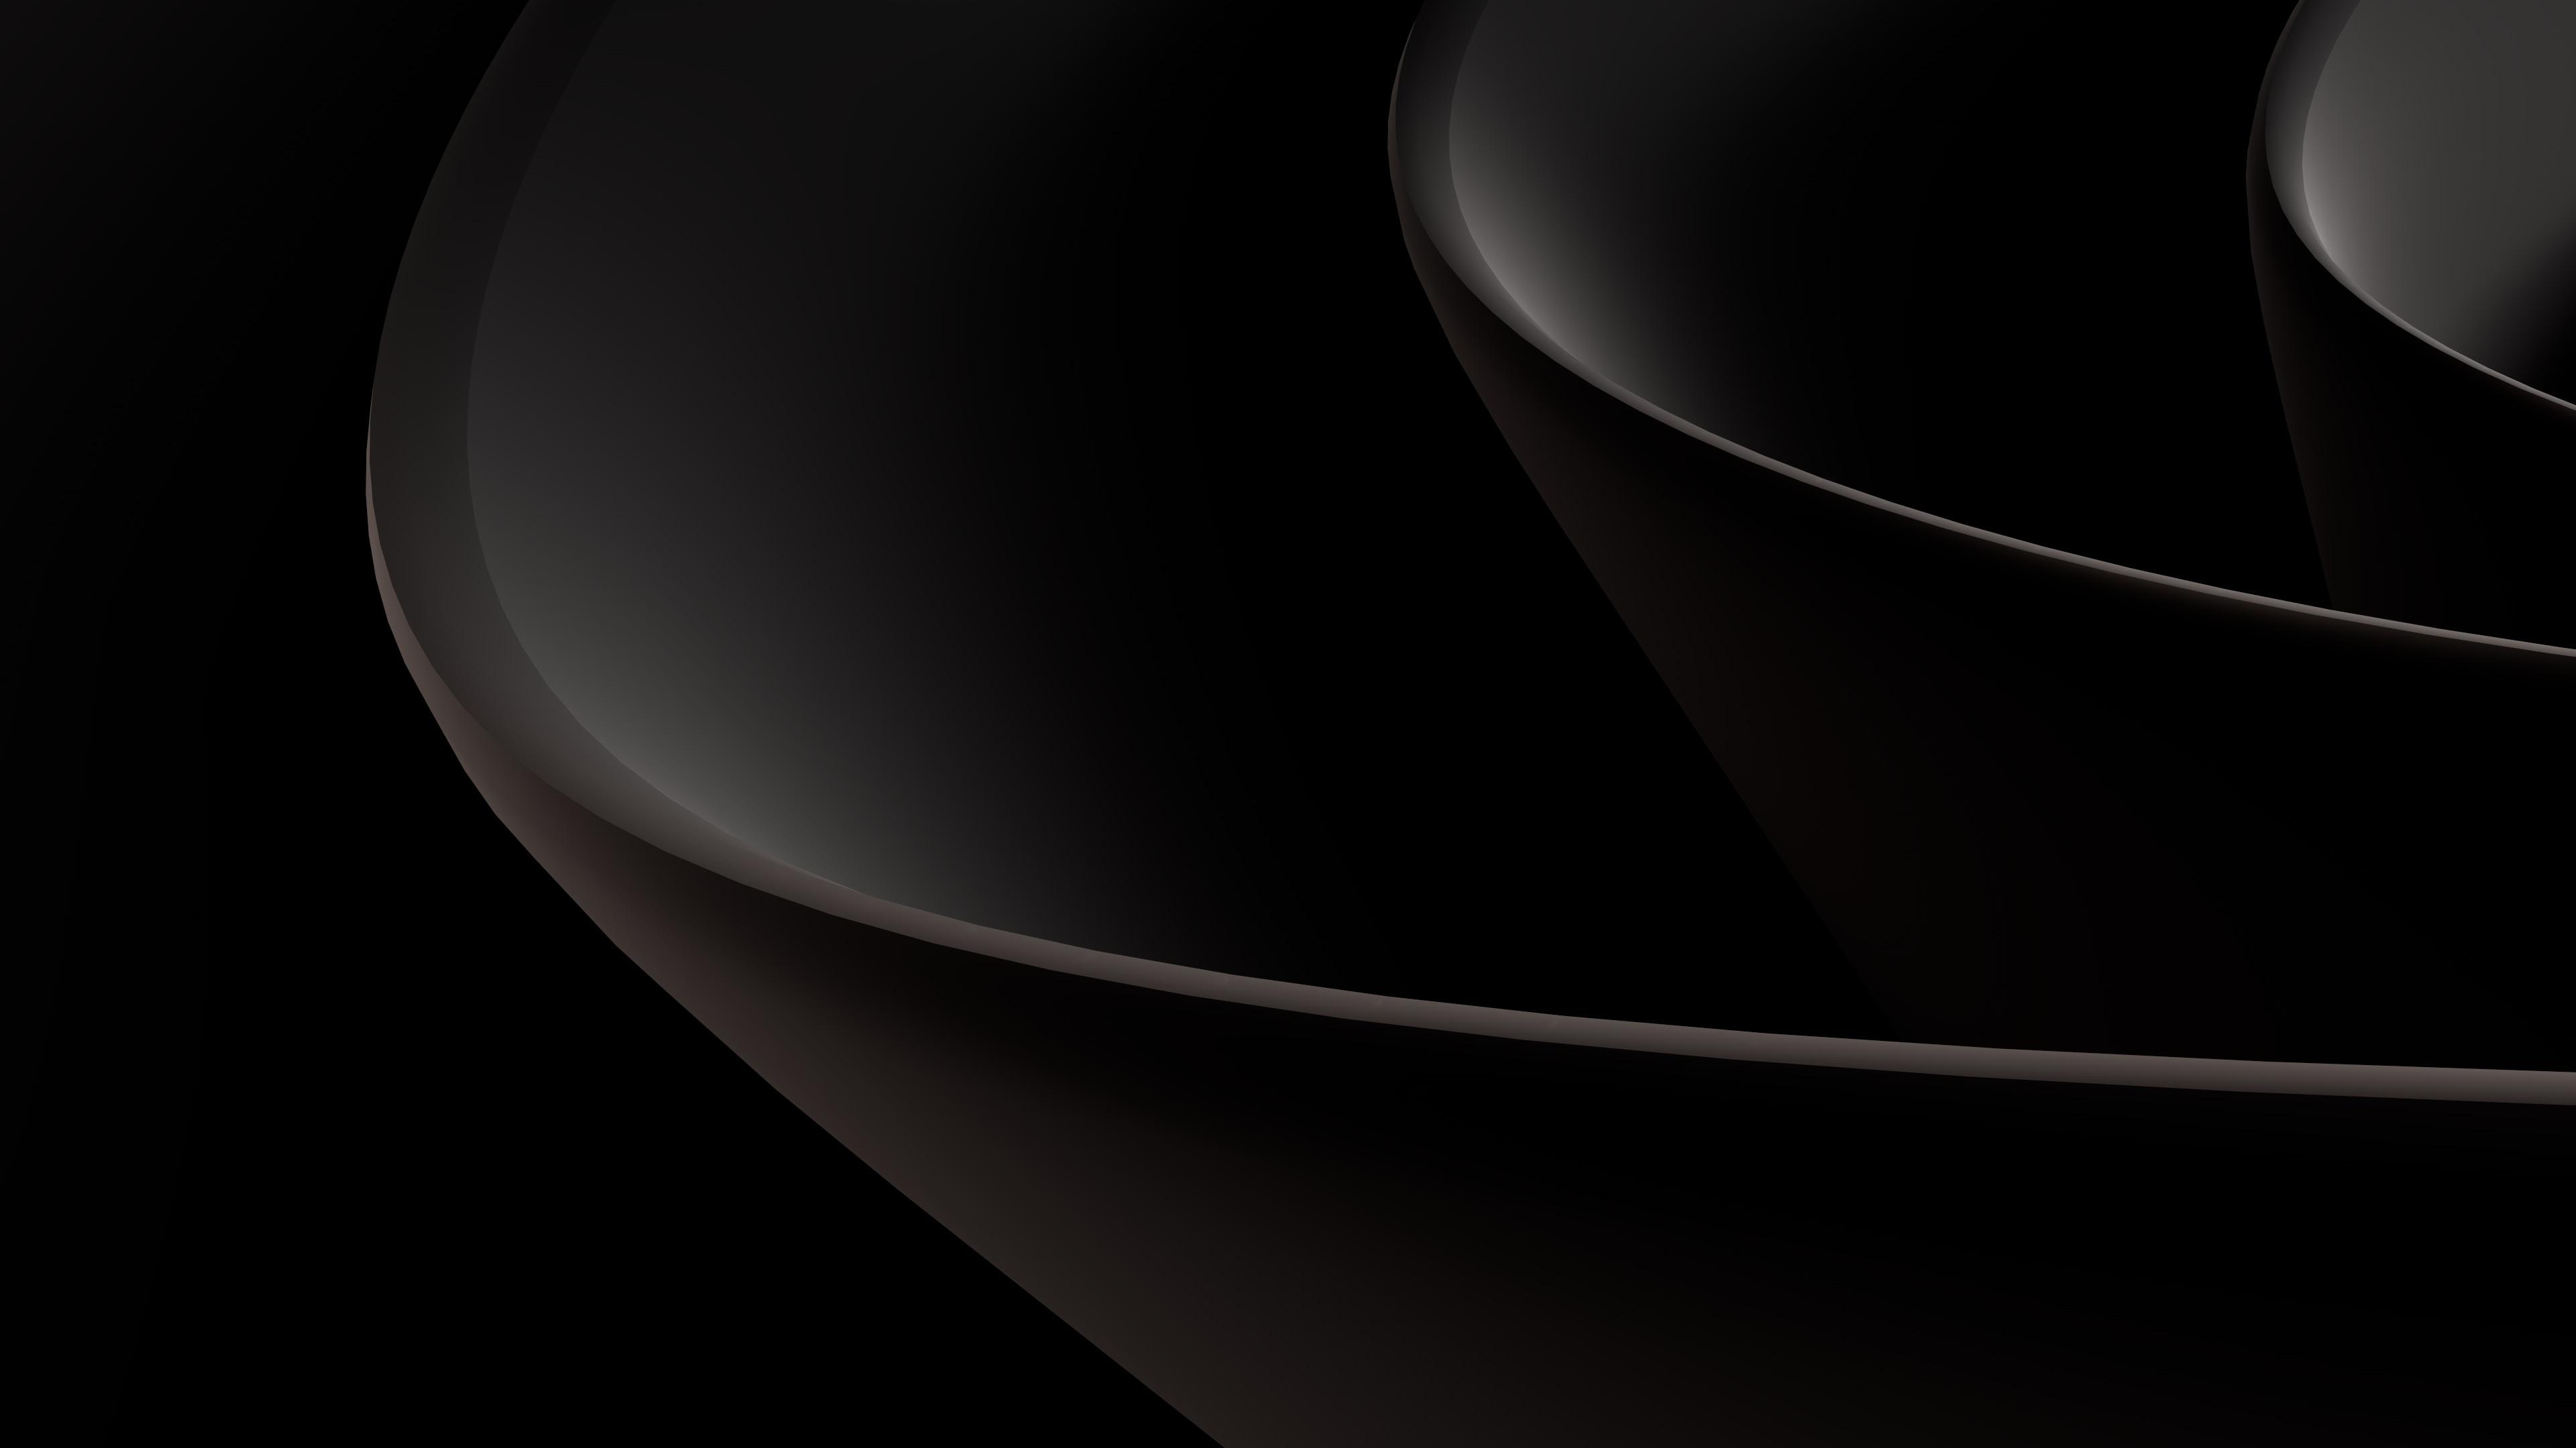 Free download Abstract Black 4k Ultra HD Wallpaper by Andrew Kliatskyi ...